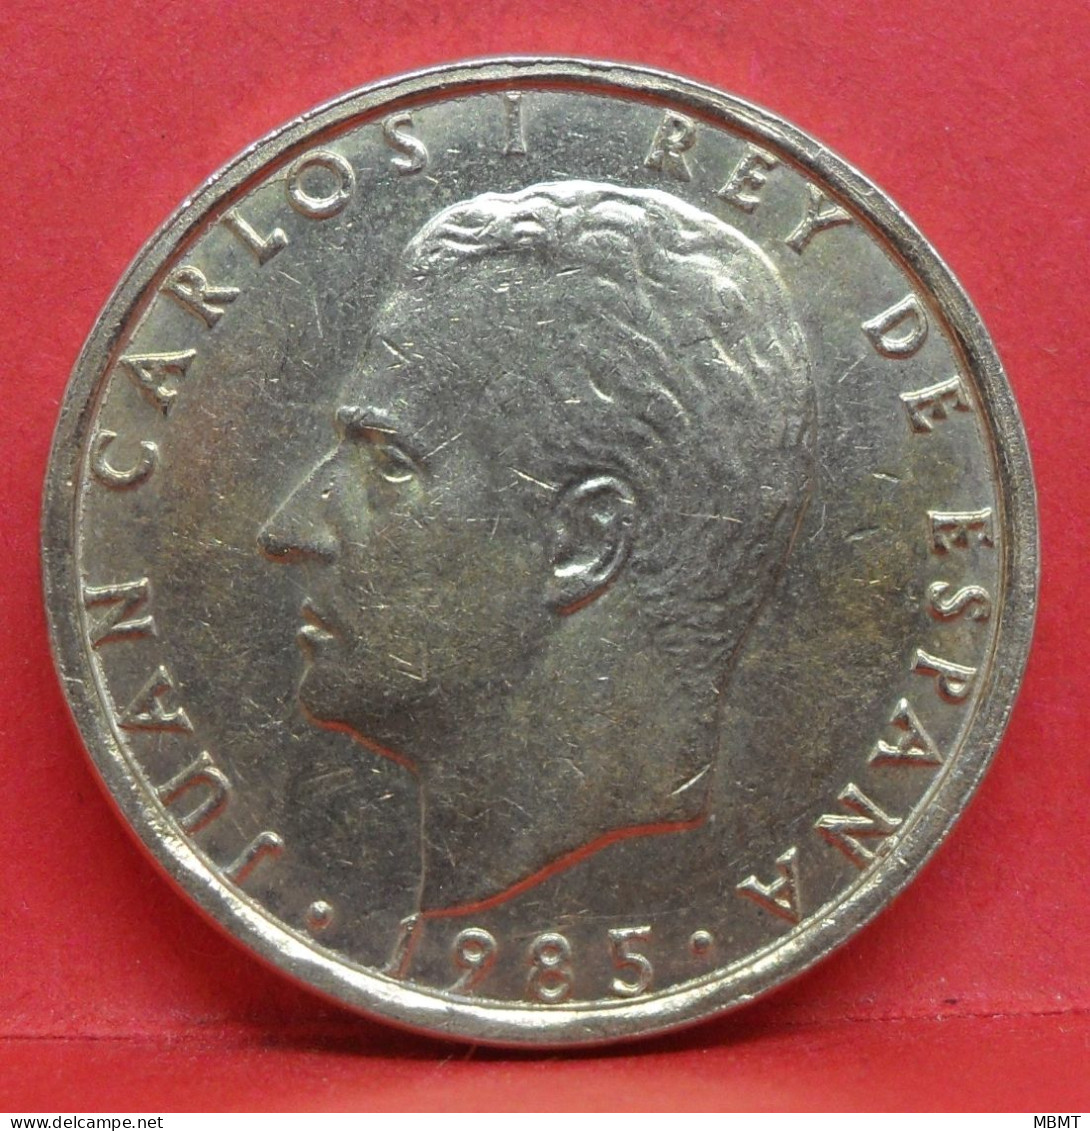 100 Pesetas 1985 - TTB - Pièce Monnaie Espagne - Article N°2495 - 100 Peseta